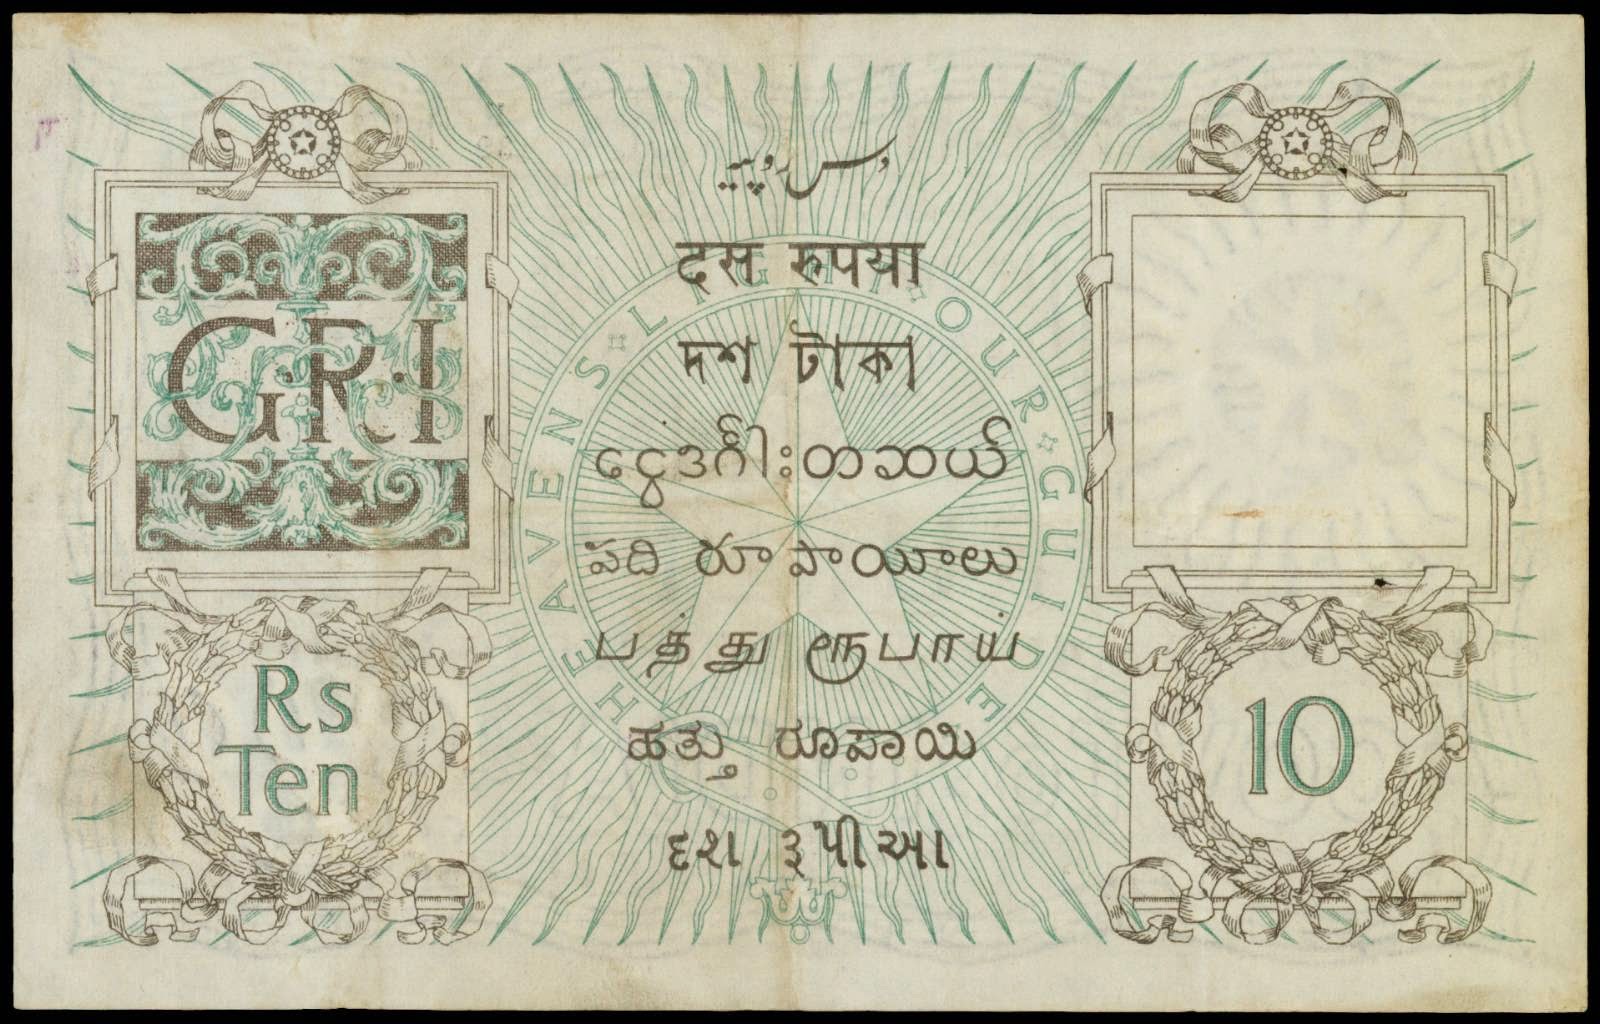 British India Ten Rupee Note